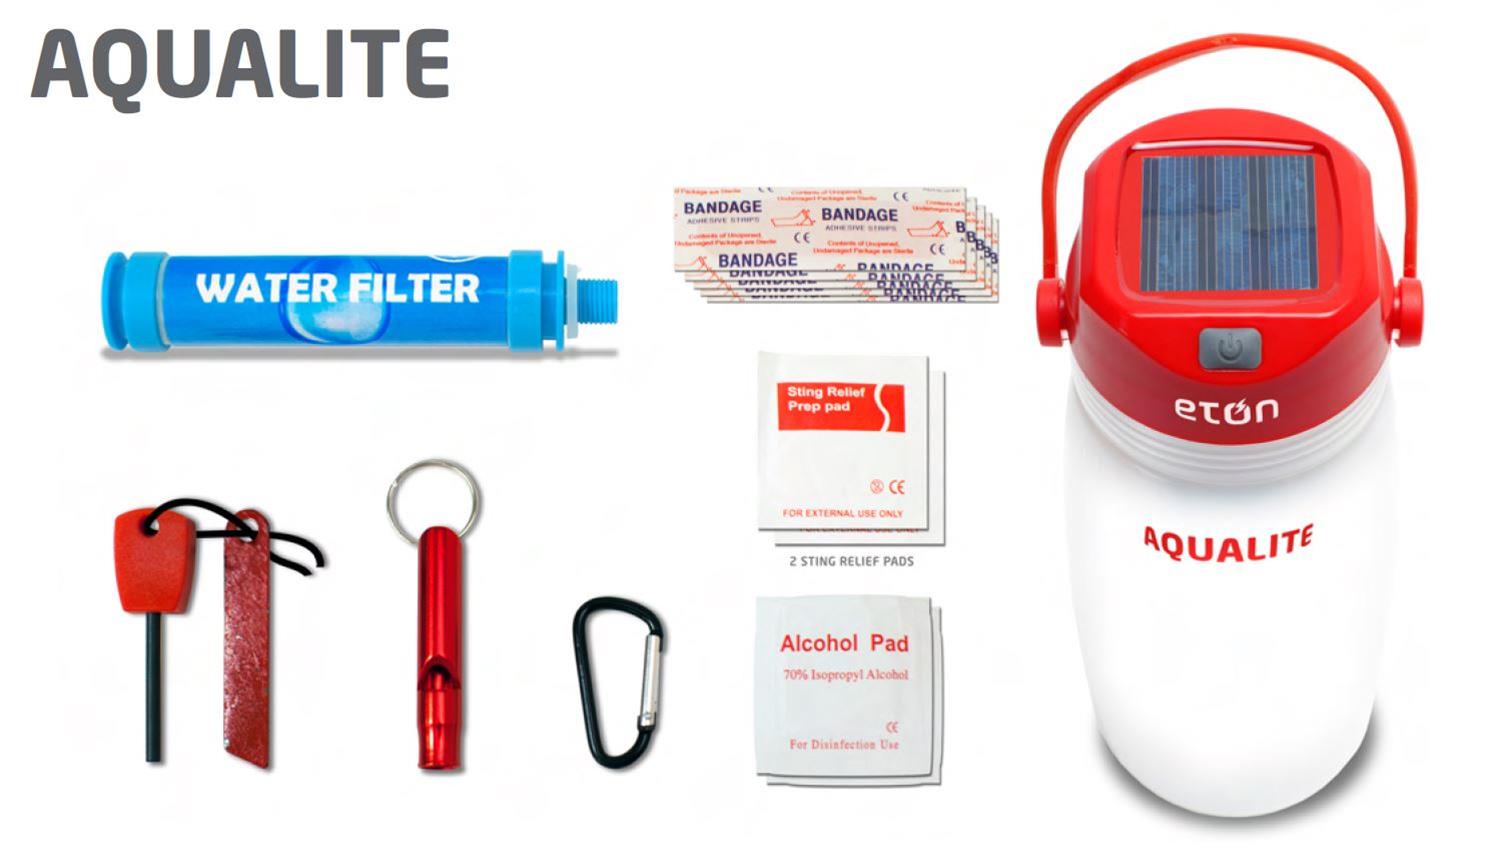 Eton Aqualite Solar Powered Lantern & Basic Emergency Kit